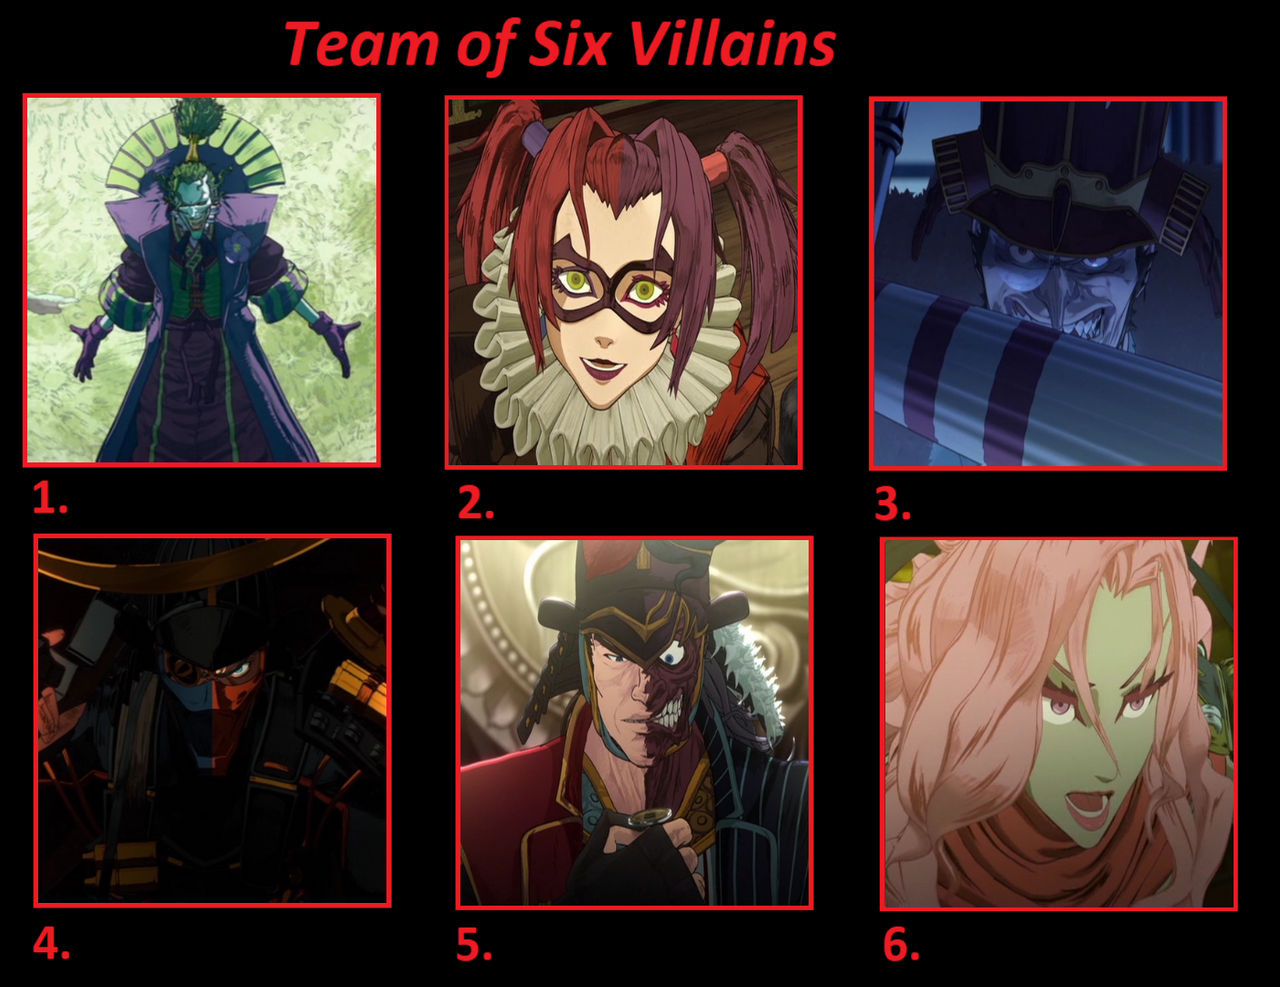 Team of Six Batman Ninja Villains by Lahmom2000 on DeviantArt